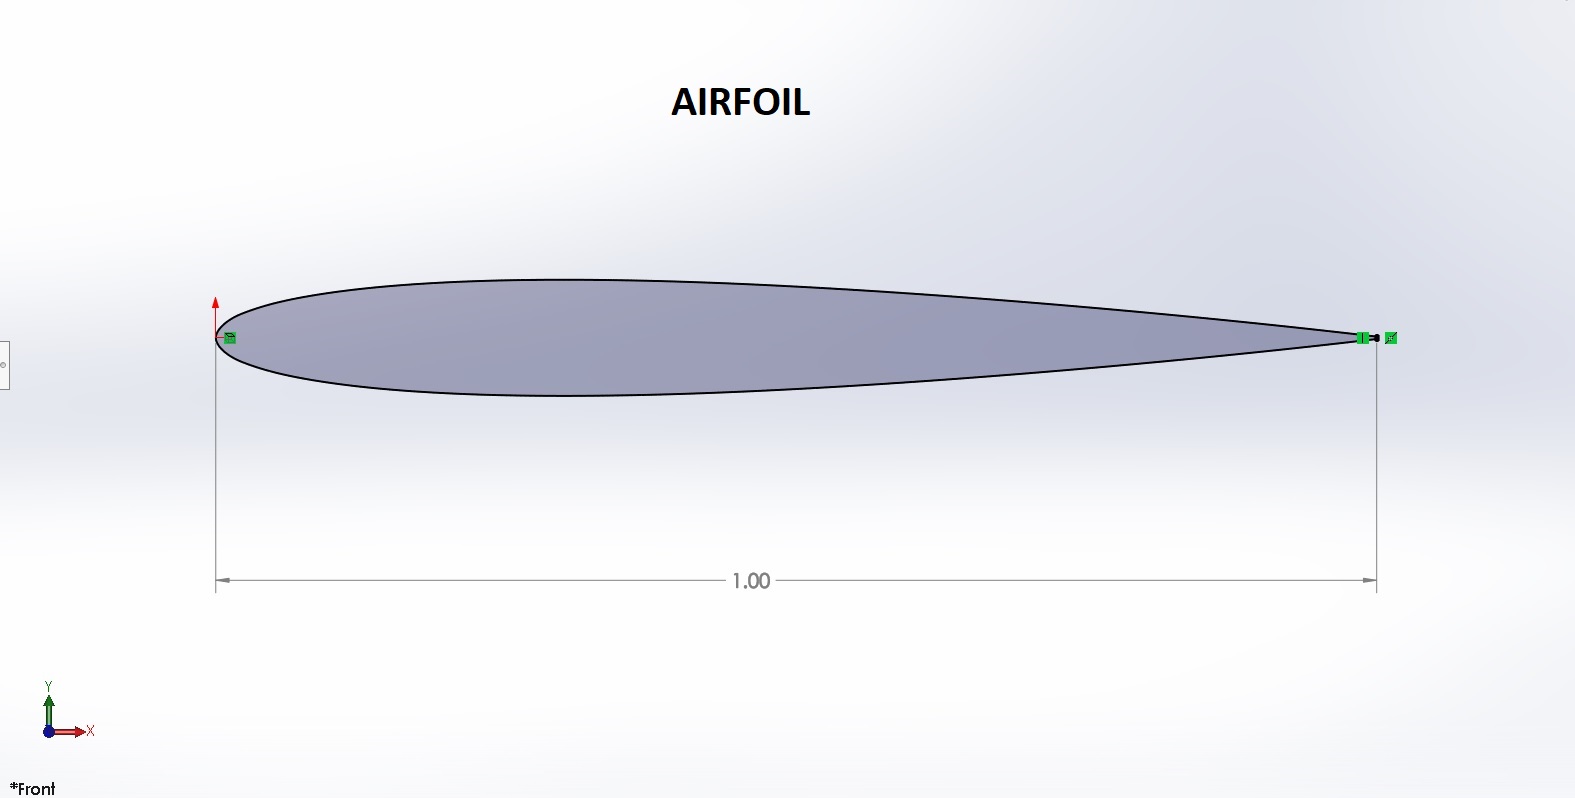 airfoil database with descriptions